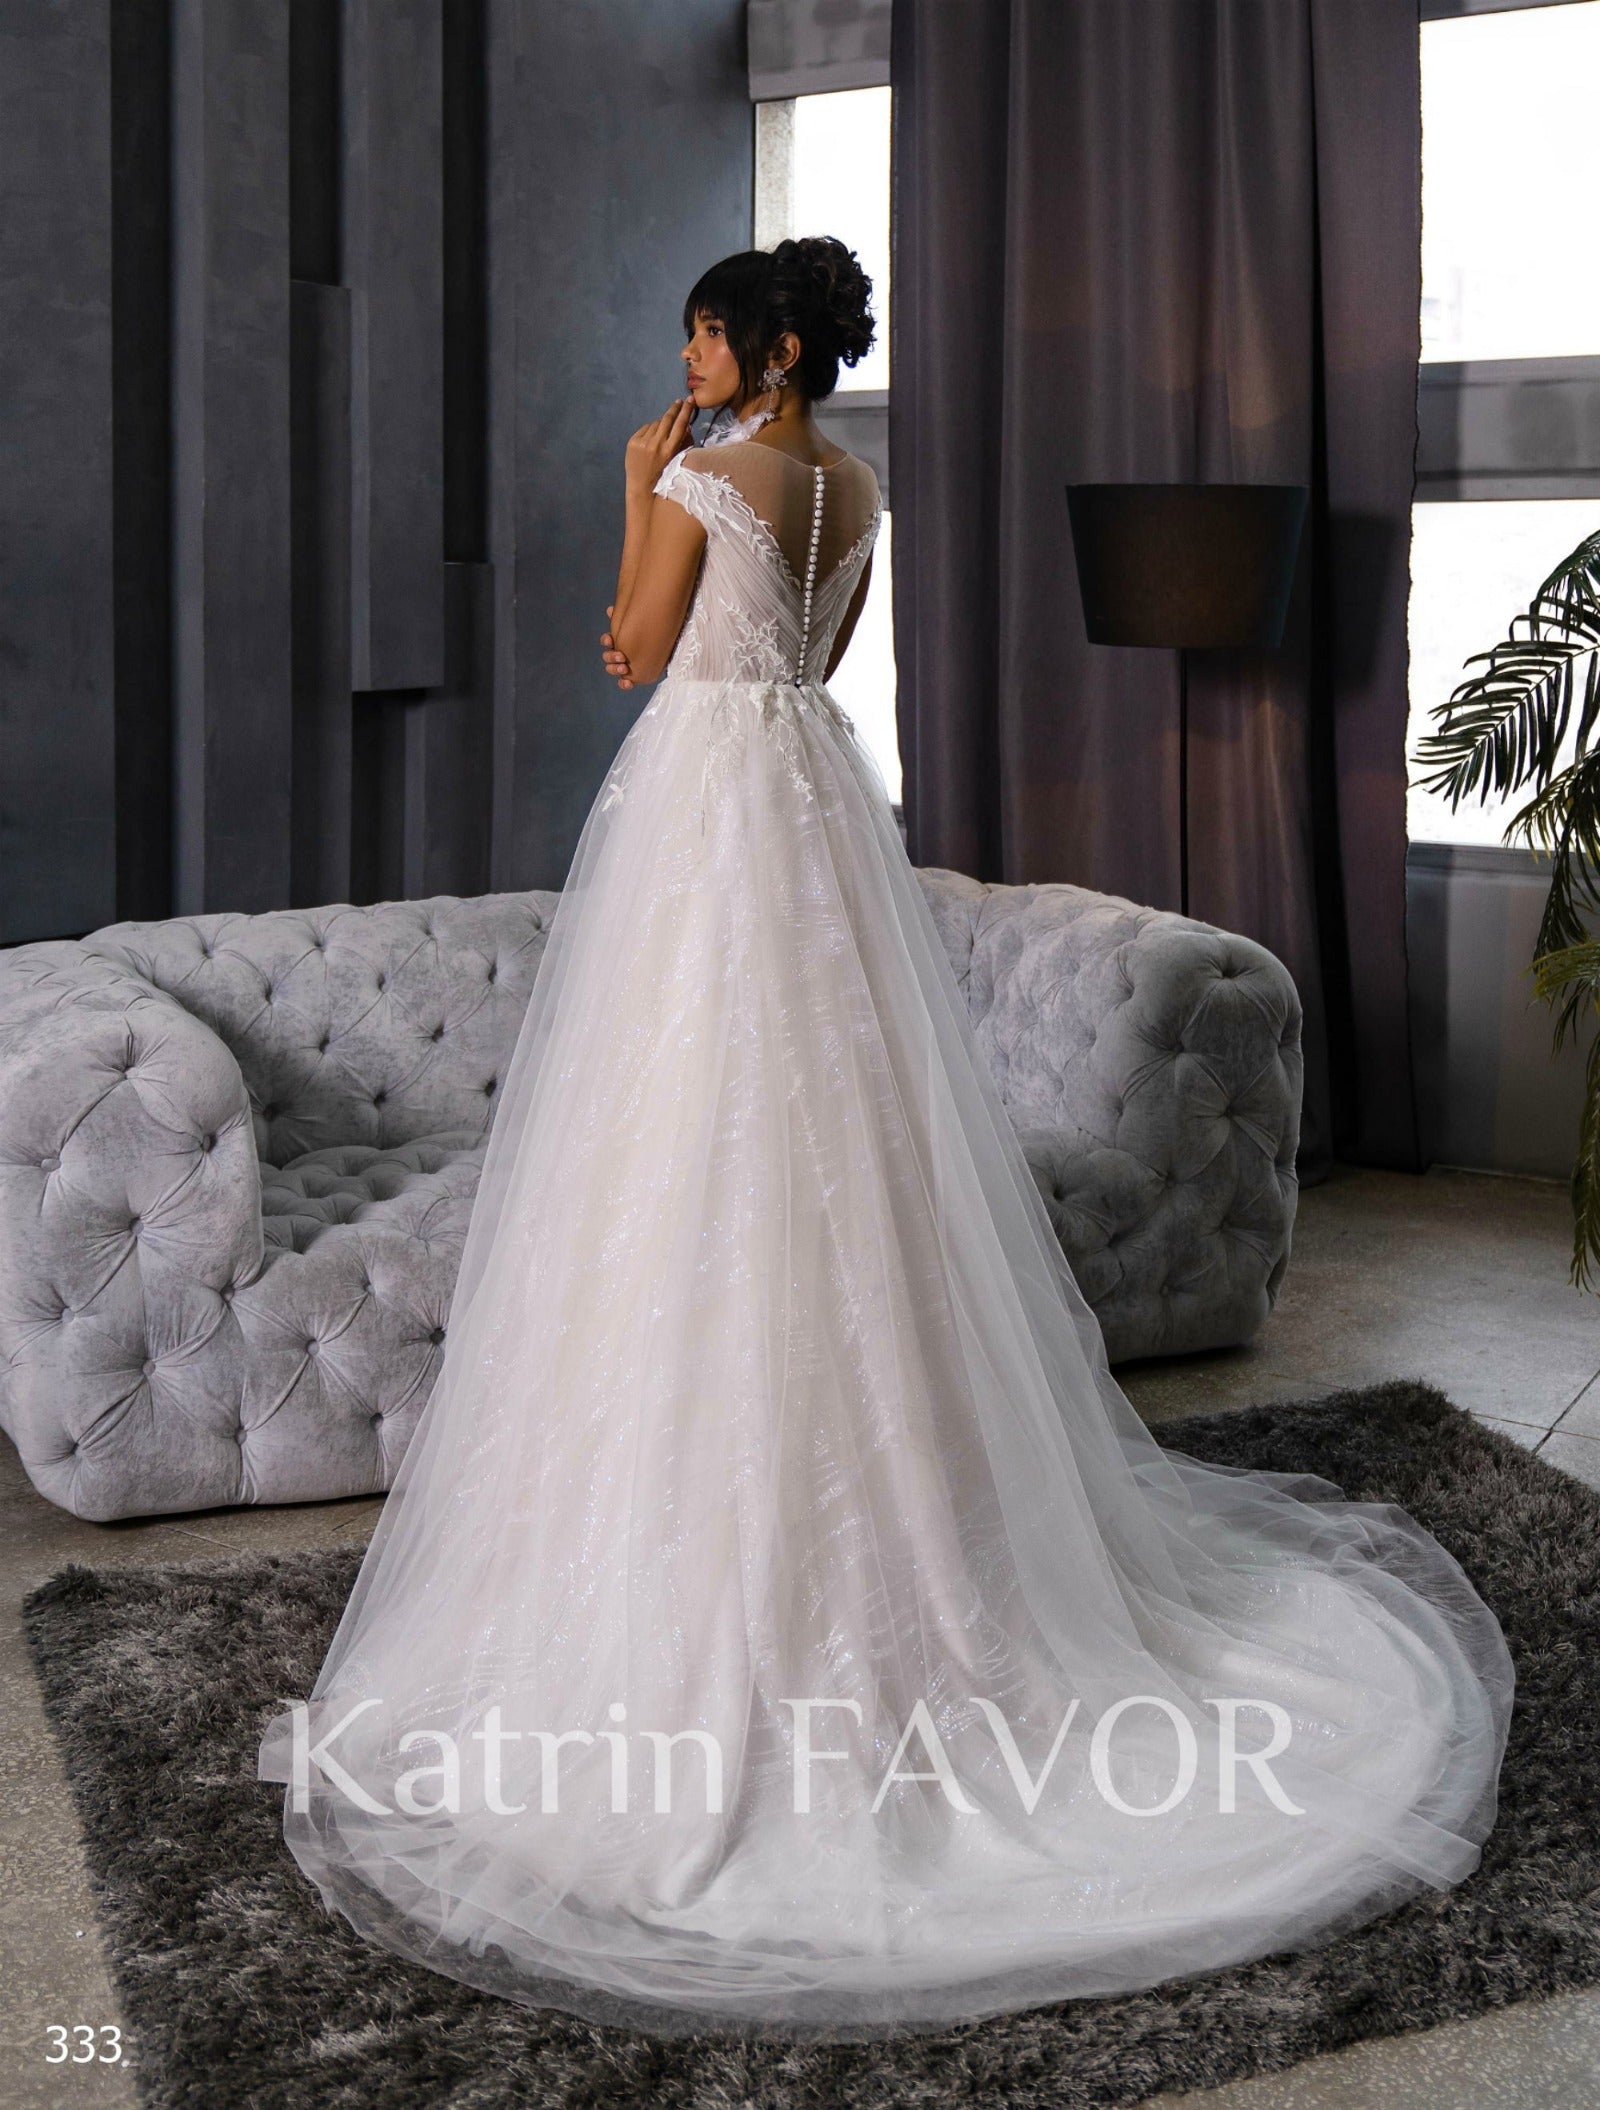 KatrinFAVORboutique-Tulle rustic wedding dress